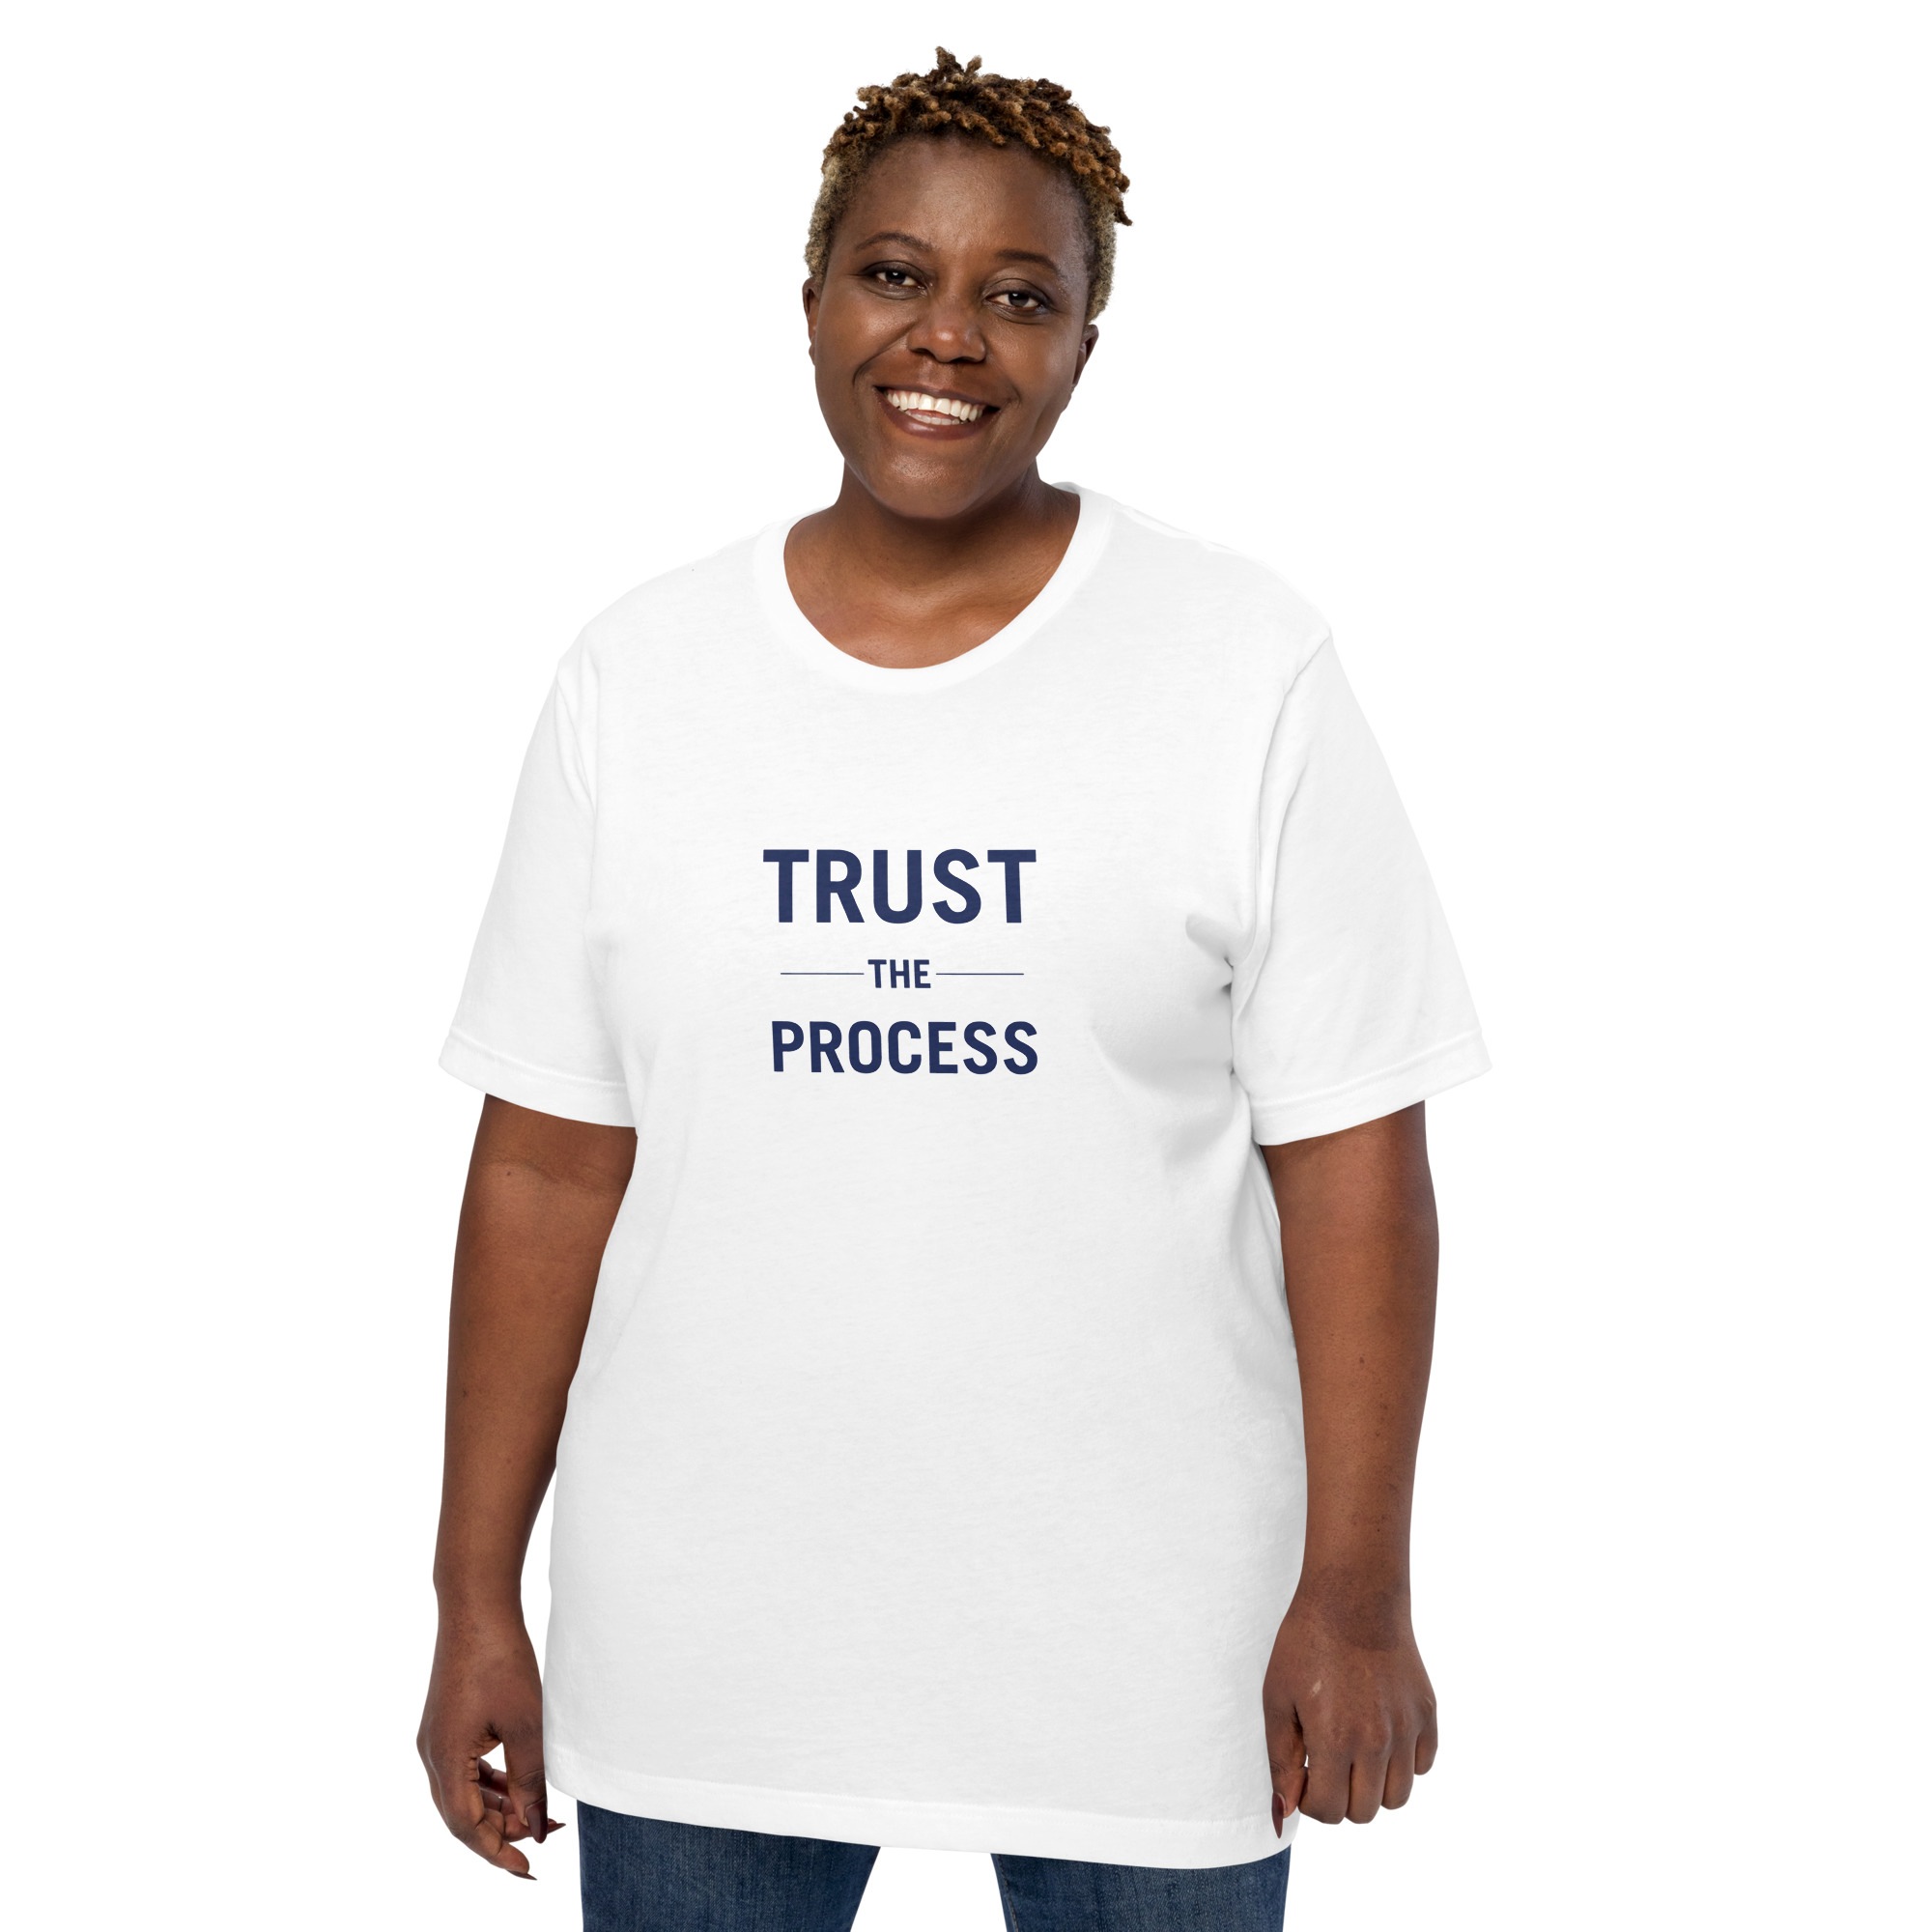 Trust the Process Spiritual T-shirt